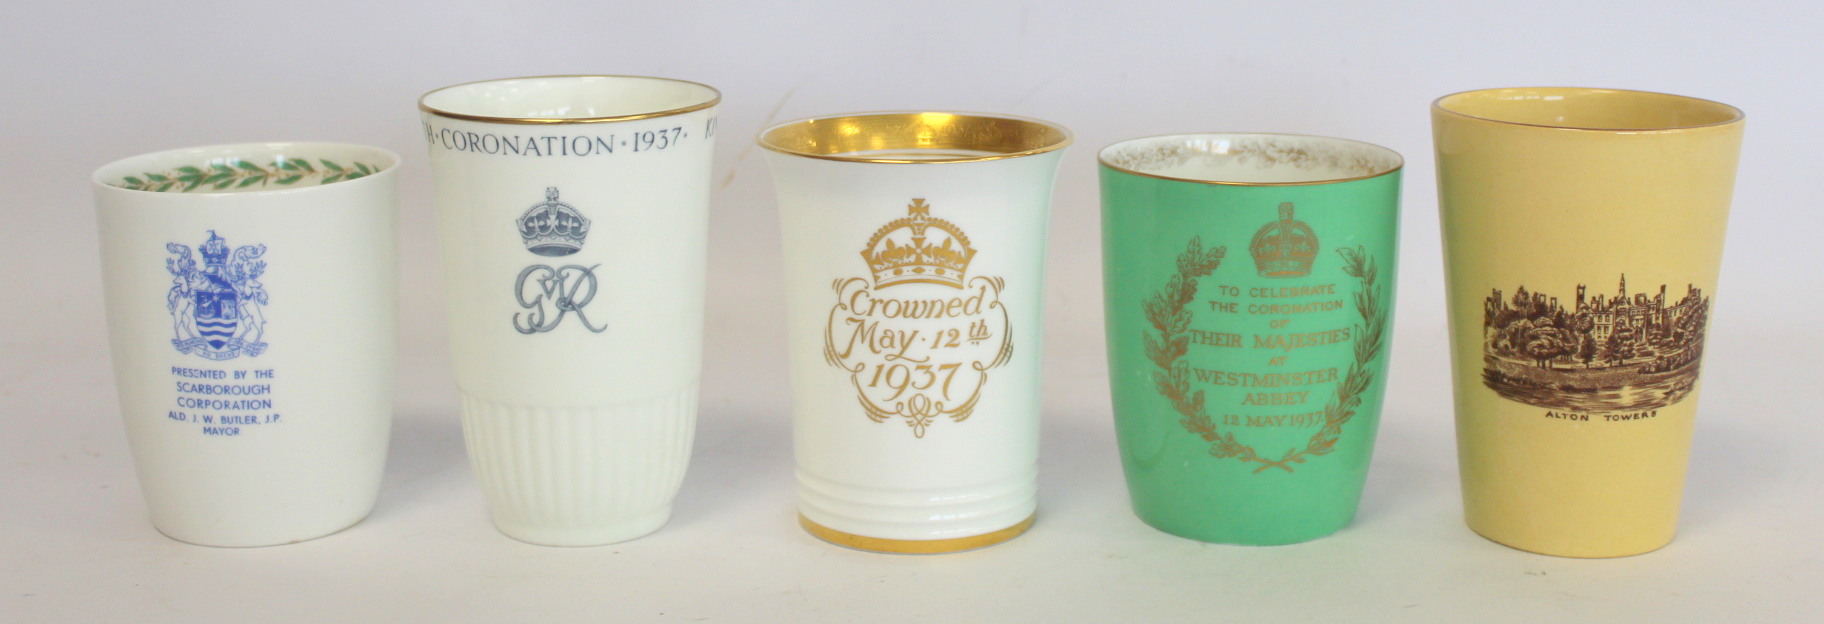 Minton limited edition commemorative beaker for the Coronation of George VI and Queen Elizabeth - Bild 2 aus 3